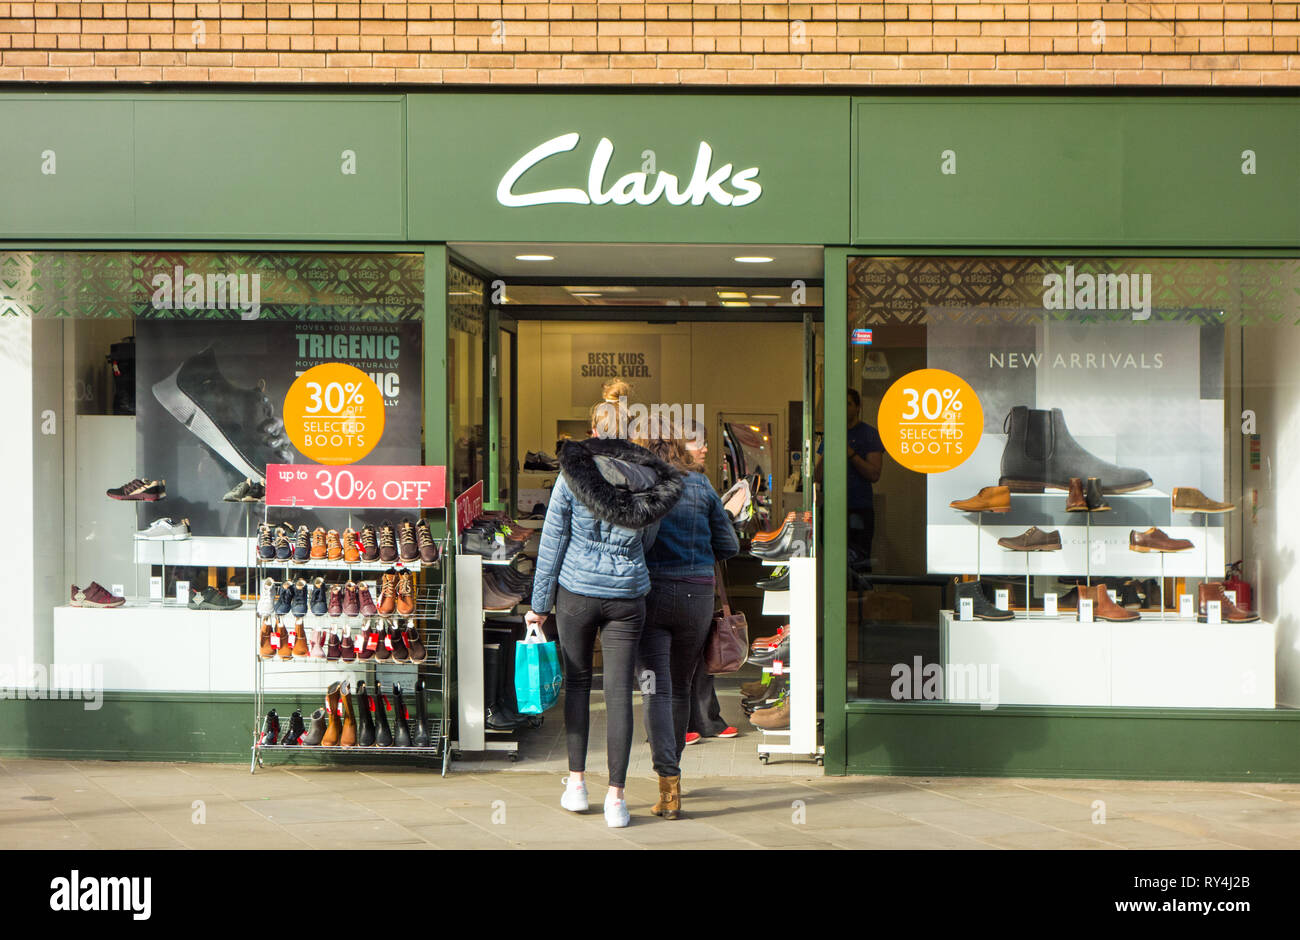 clarks shoe store orlando fl